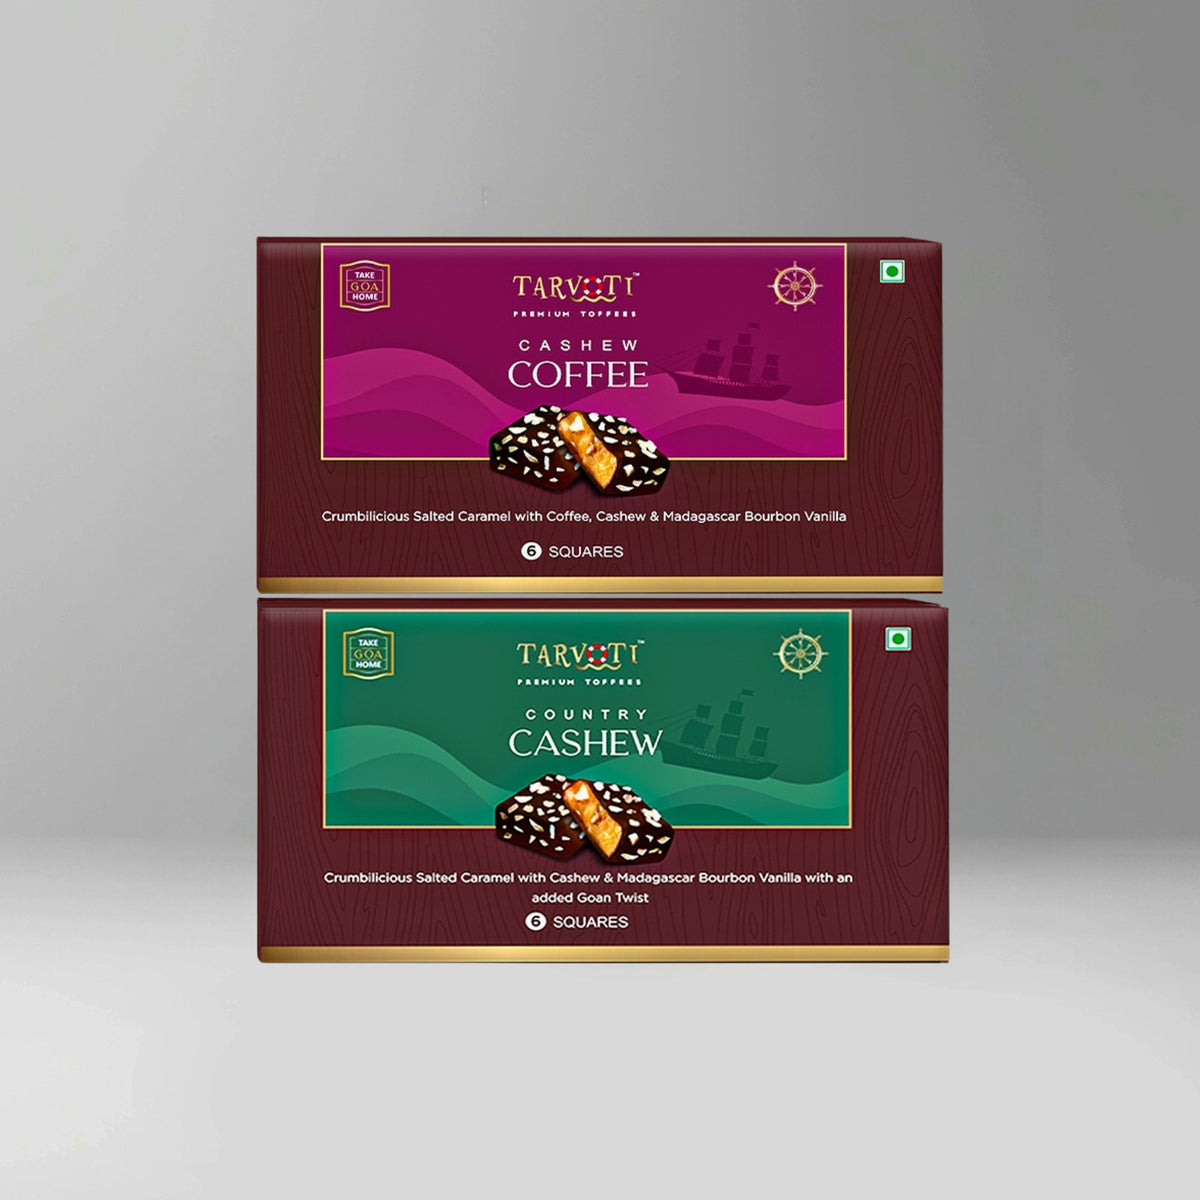 TARVOTI Premium Toffee- 2pc Combo | Cashew Coffee + country cashew| 6units pouch x 2pcs x 48g each